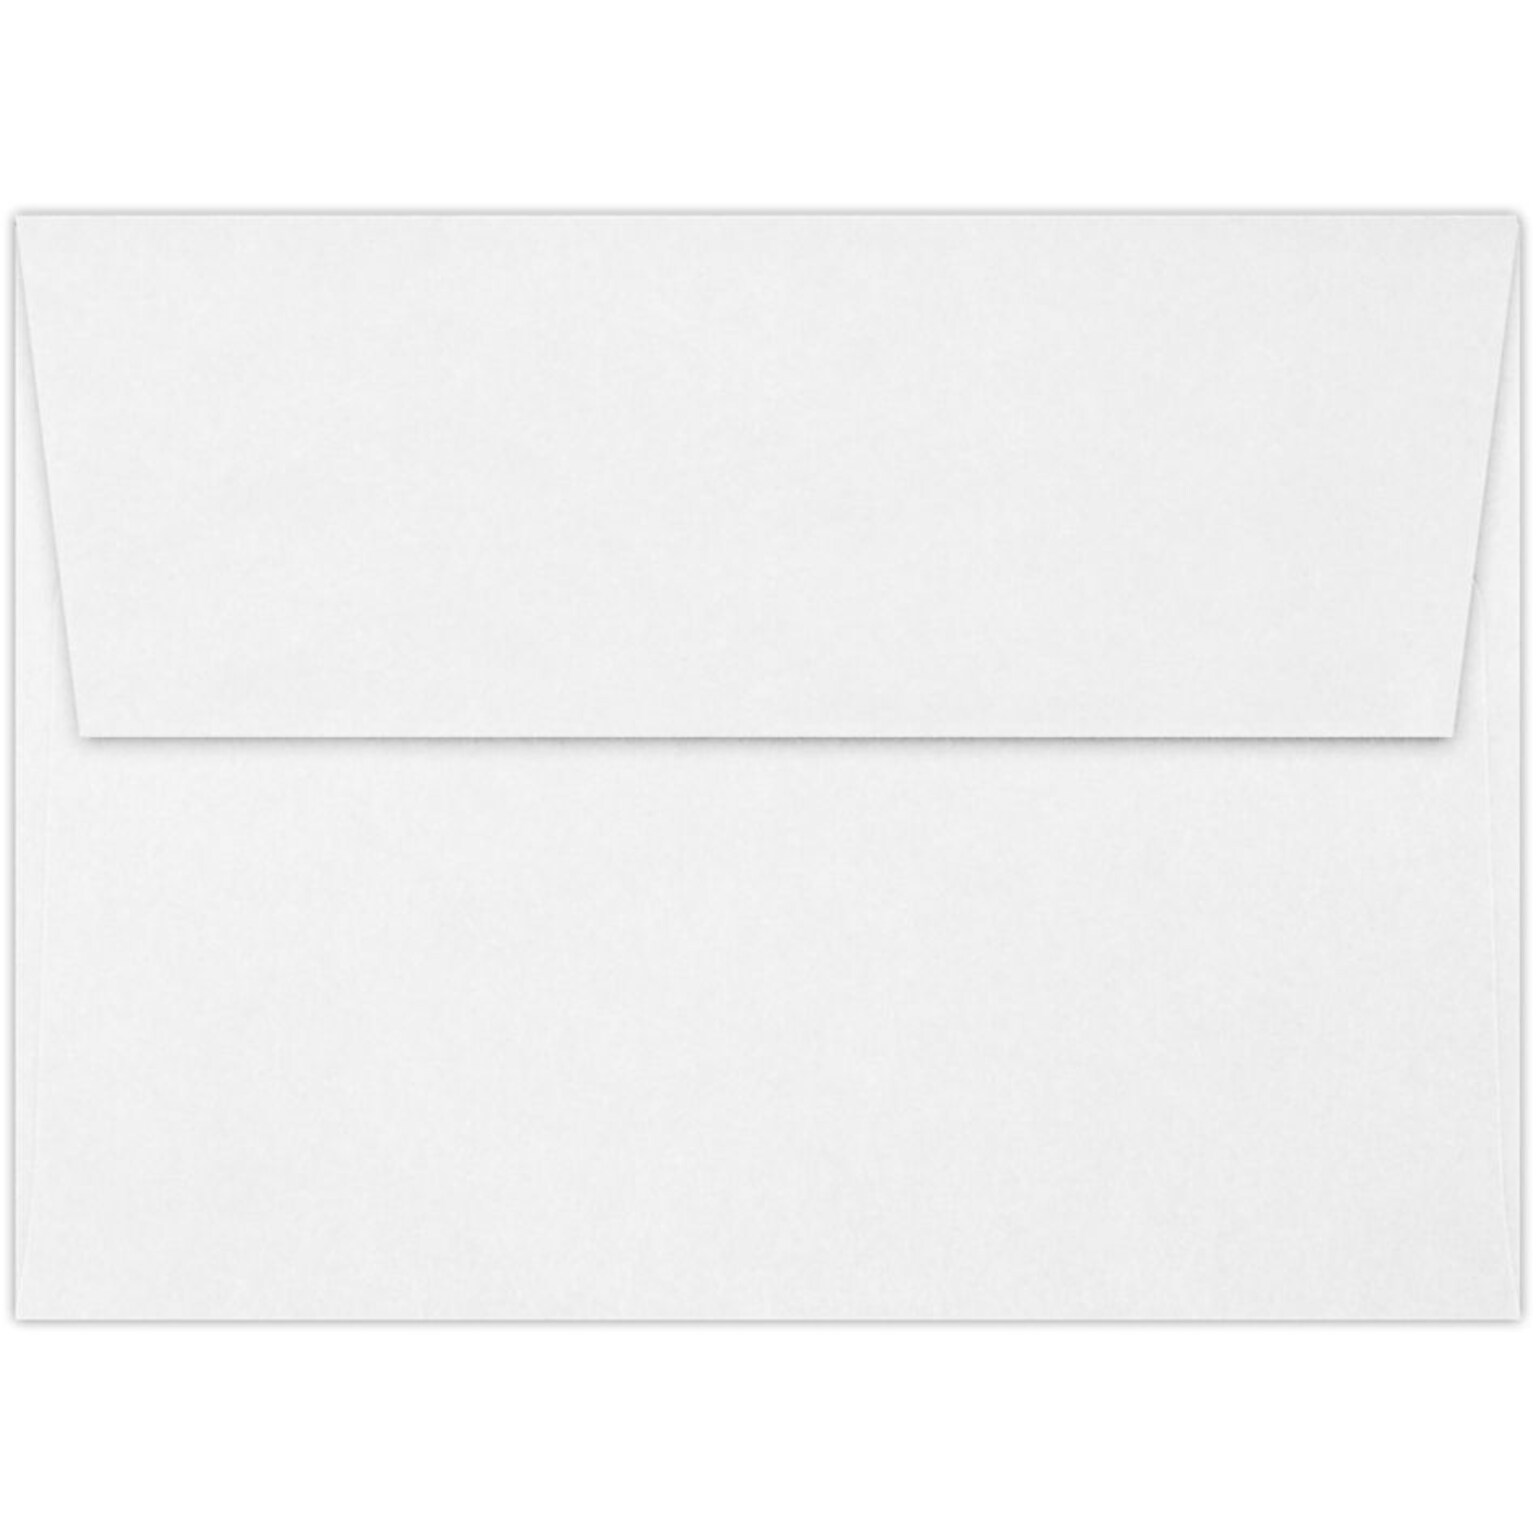 LUX A6 Invitation Envelopes (4 3/4 x 6 1/2) 50/Pack, 70lb. Classic Linen® Avon Brilliant White (4875-70AWLI-50)